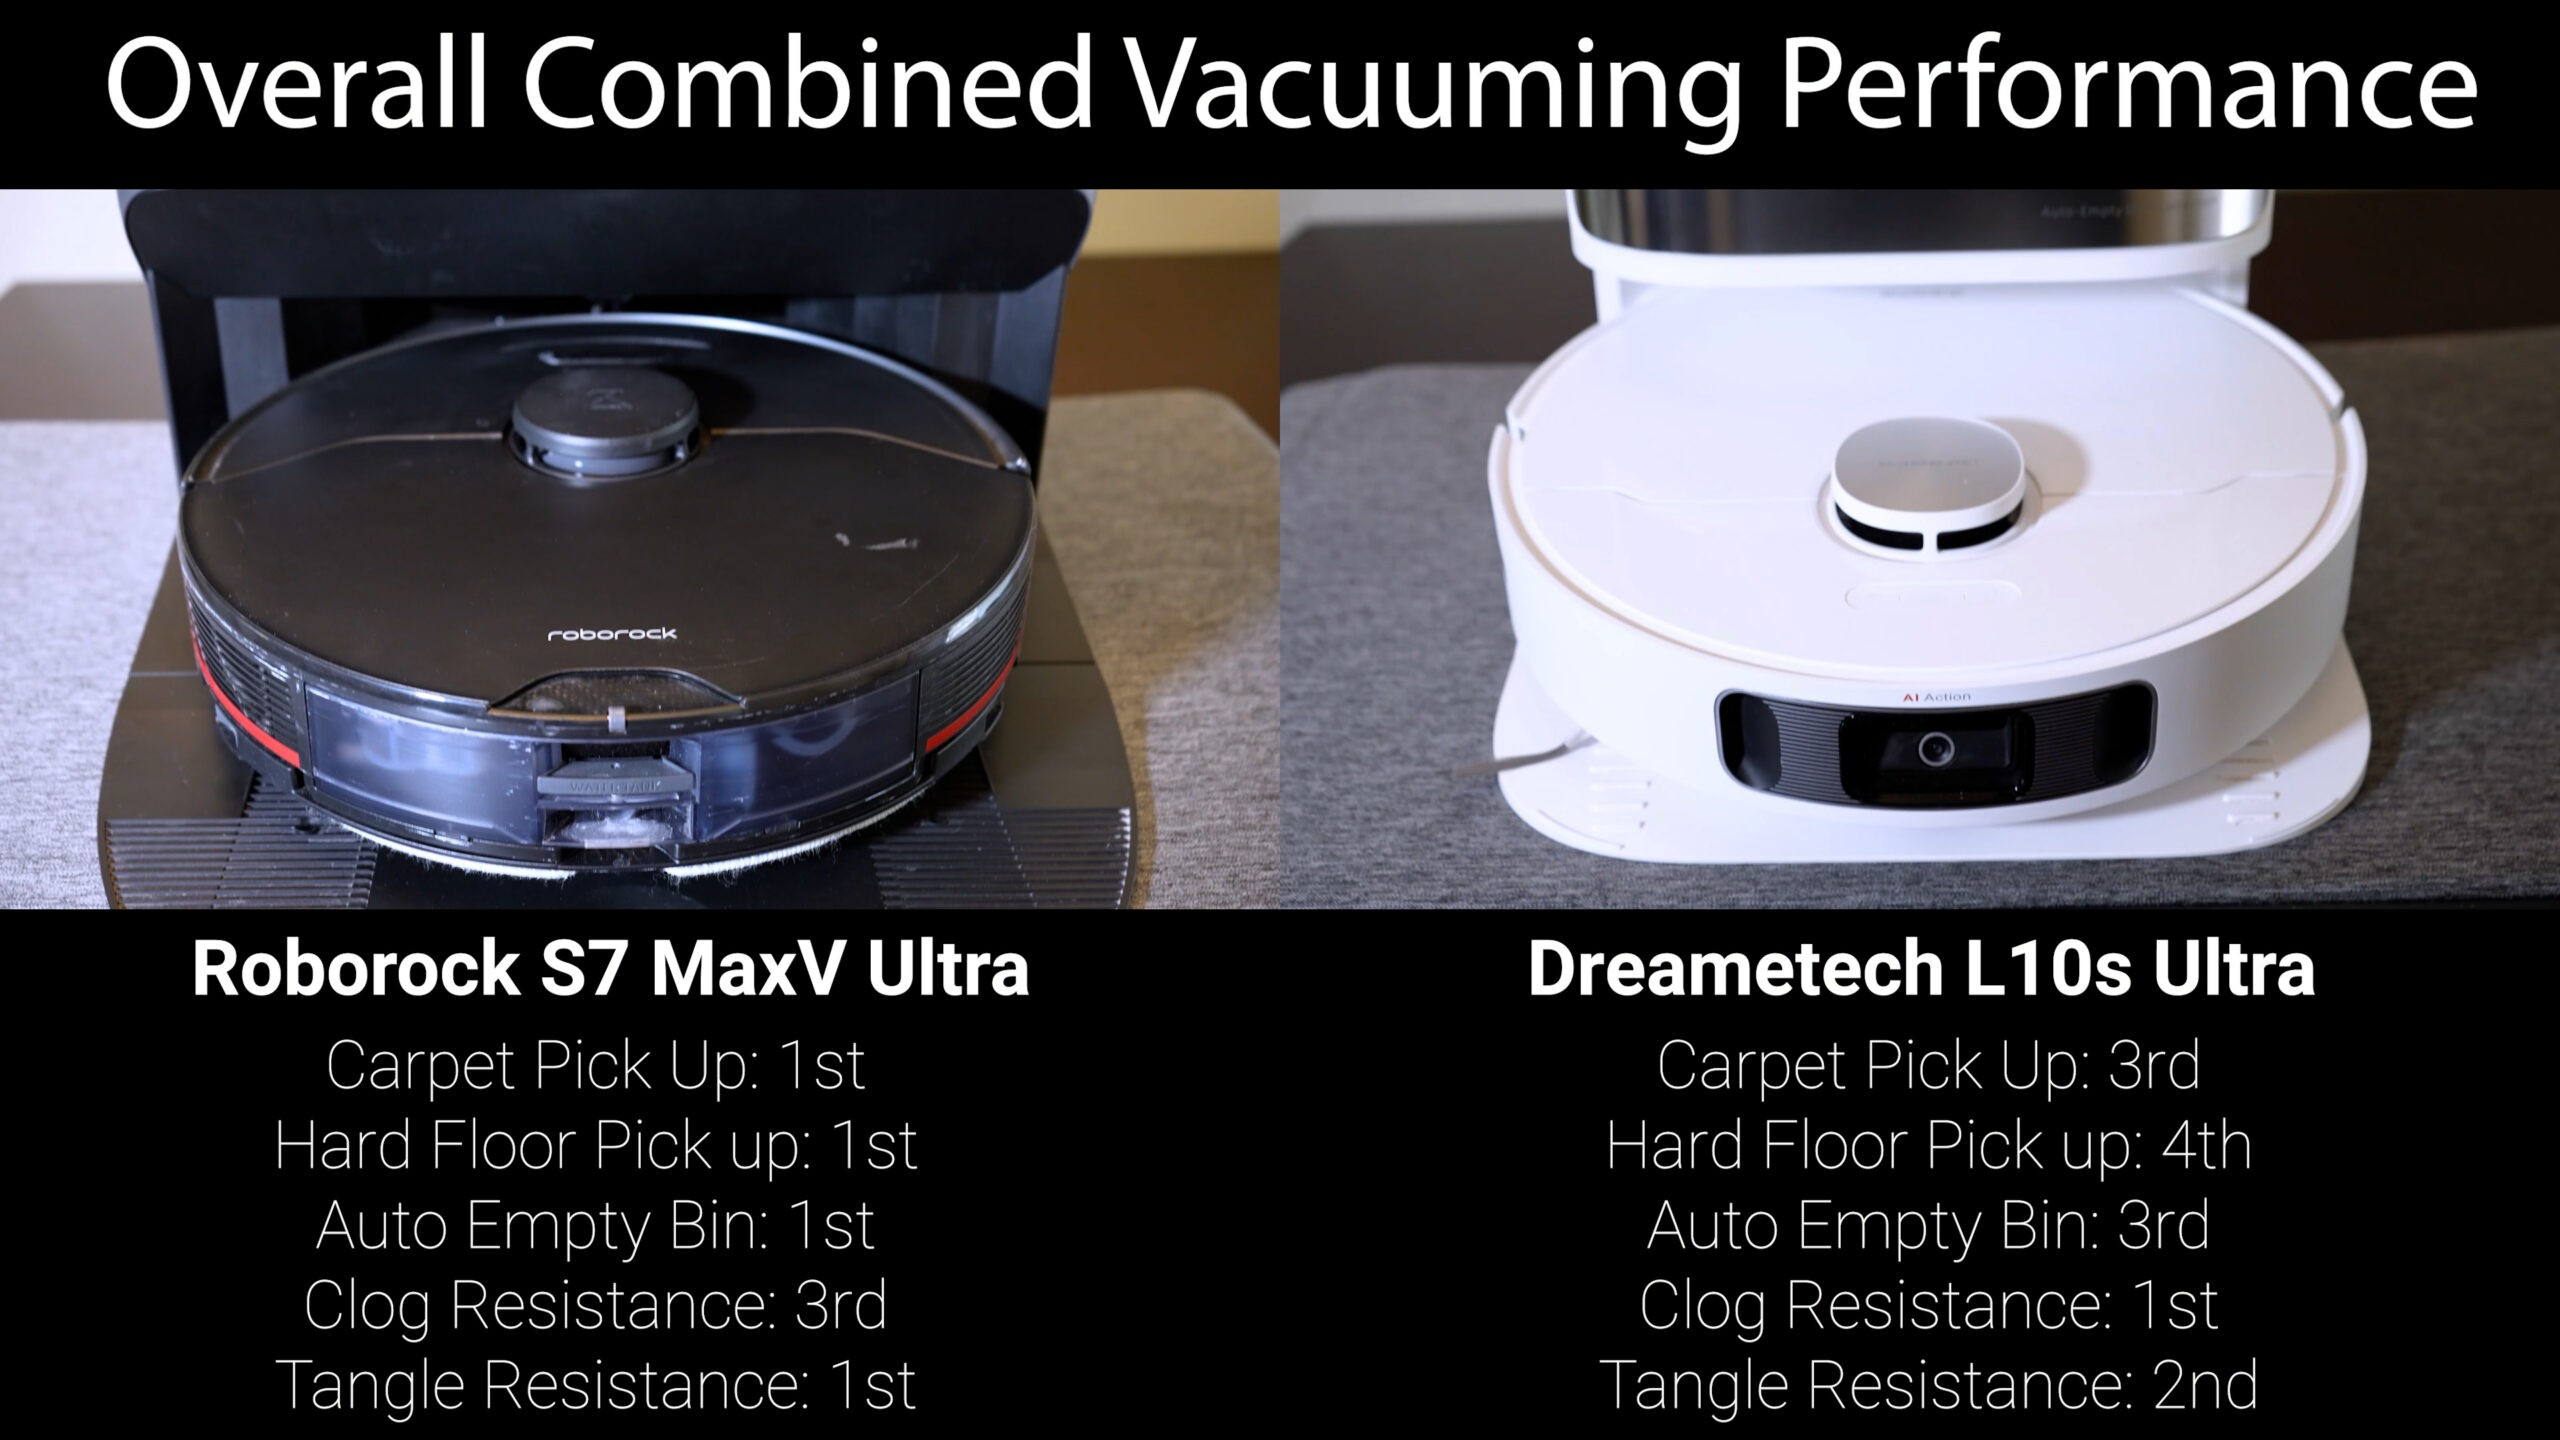  Dreametech L10s Ultra Robot Vacuum and Mop Combo